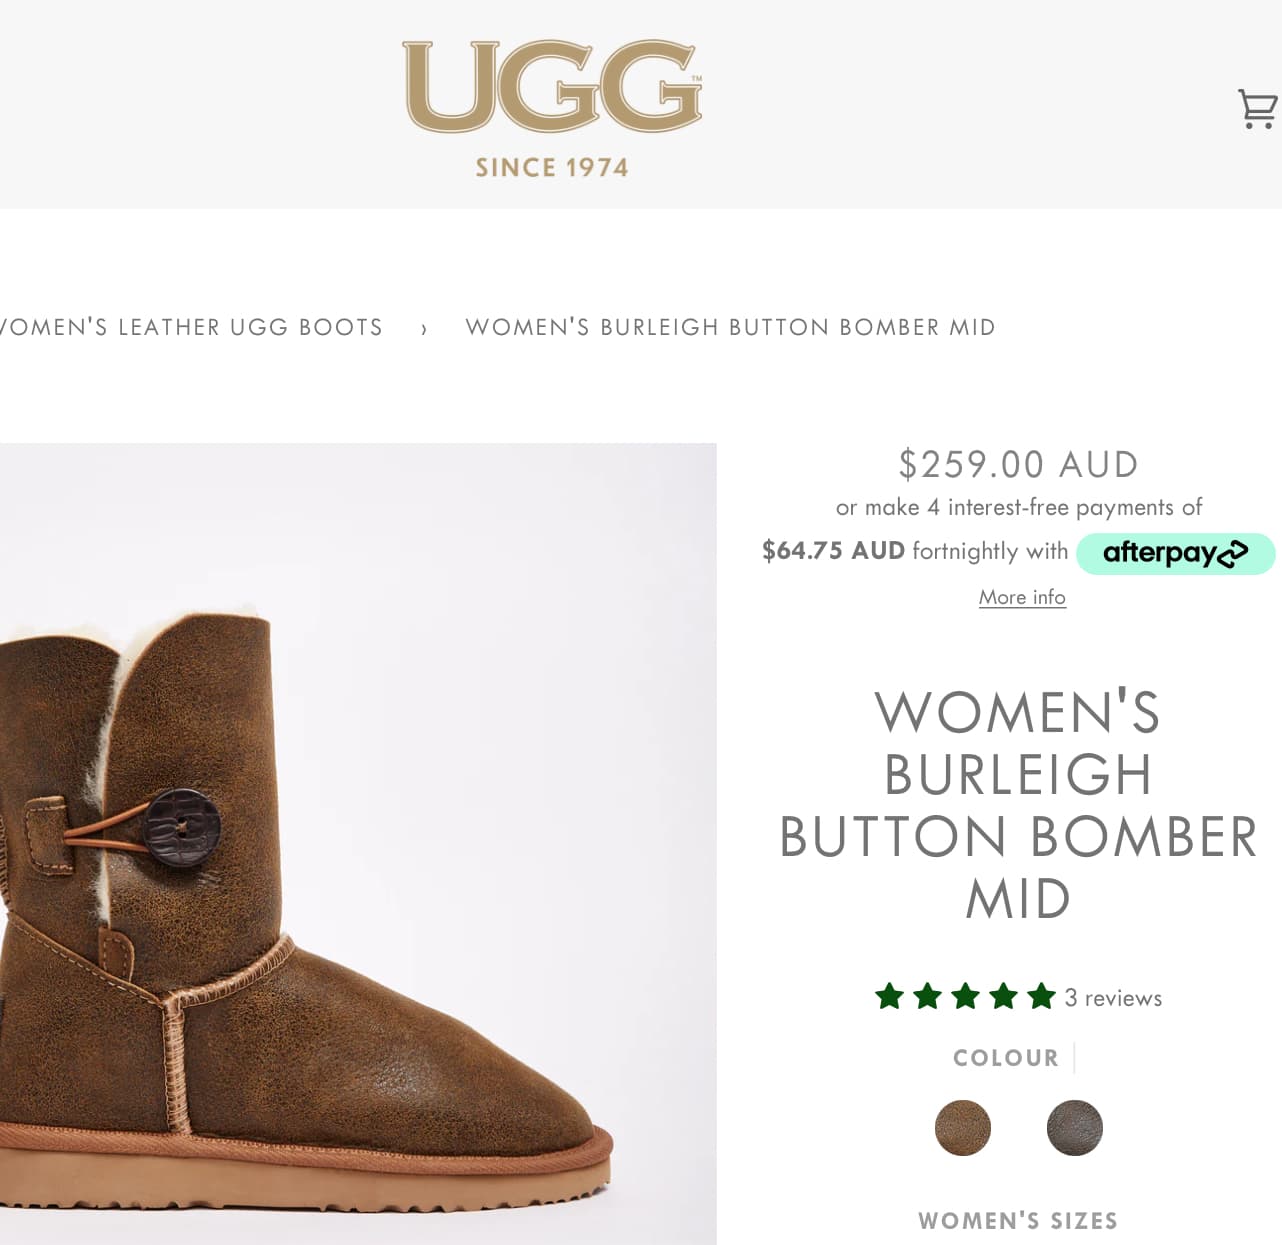 Should I wear socks with UGG boots? – UGG Since 1974